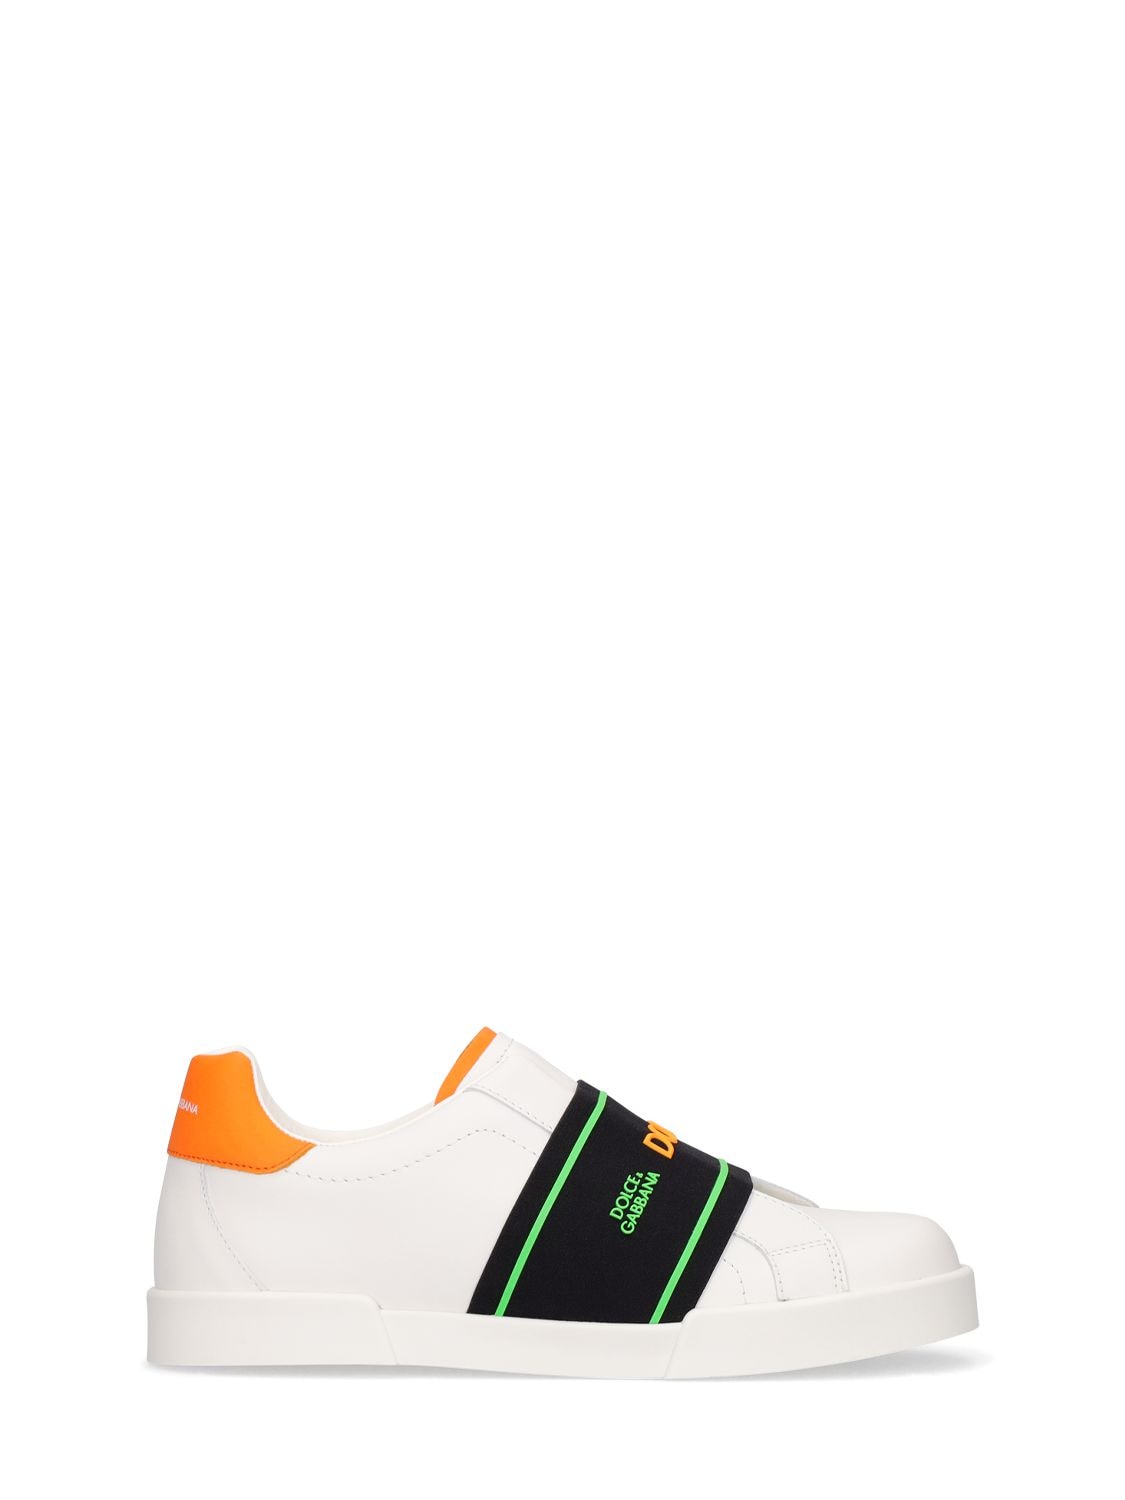 Dolce & Gabbana Kids' Leather Slip-on Sneakers W/ Logo Band In White,multi